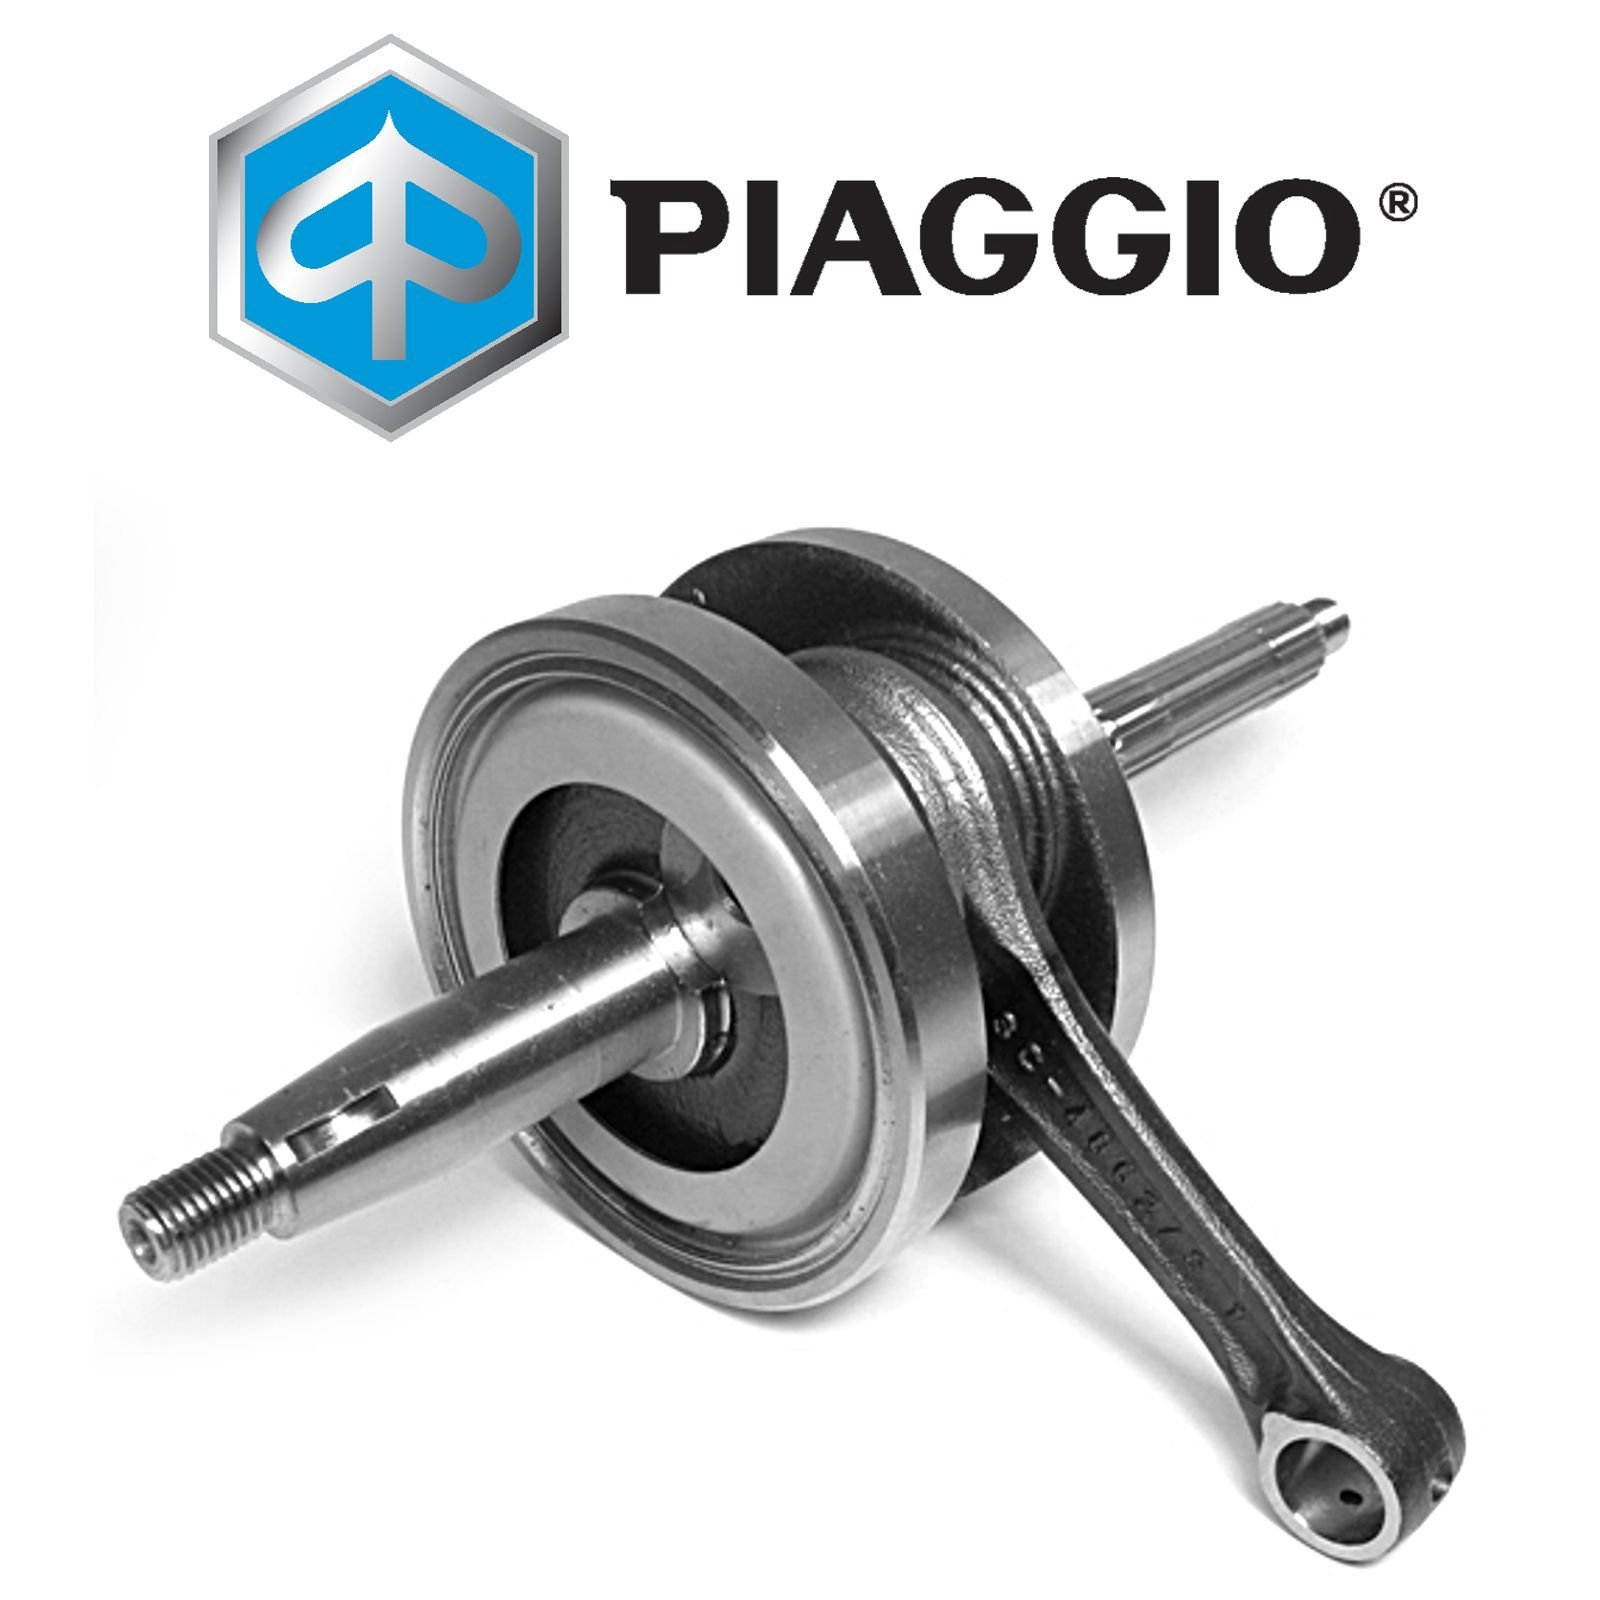 Kurbelwelle Piaggio für 50 4T, 969428 von PIAGGIO